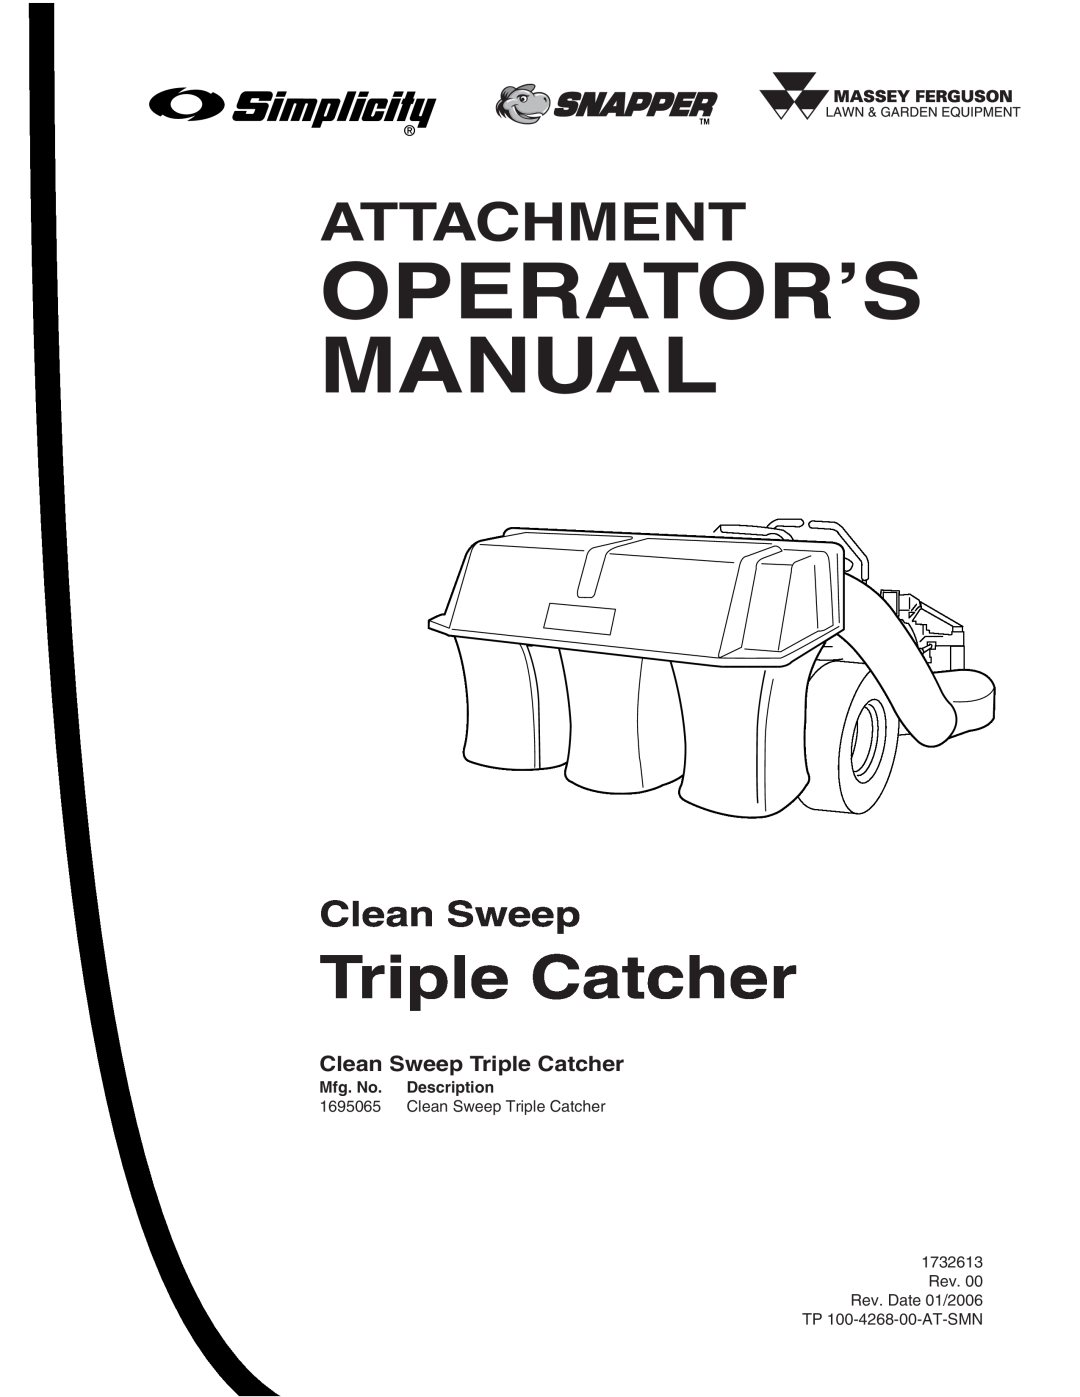 Snapper Clean Sweep Triple Catcher manual Operator’S Manual, Attachment, Mfg. No. Description, TP 100-4268-00-AT-SMN 